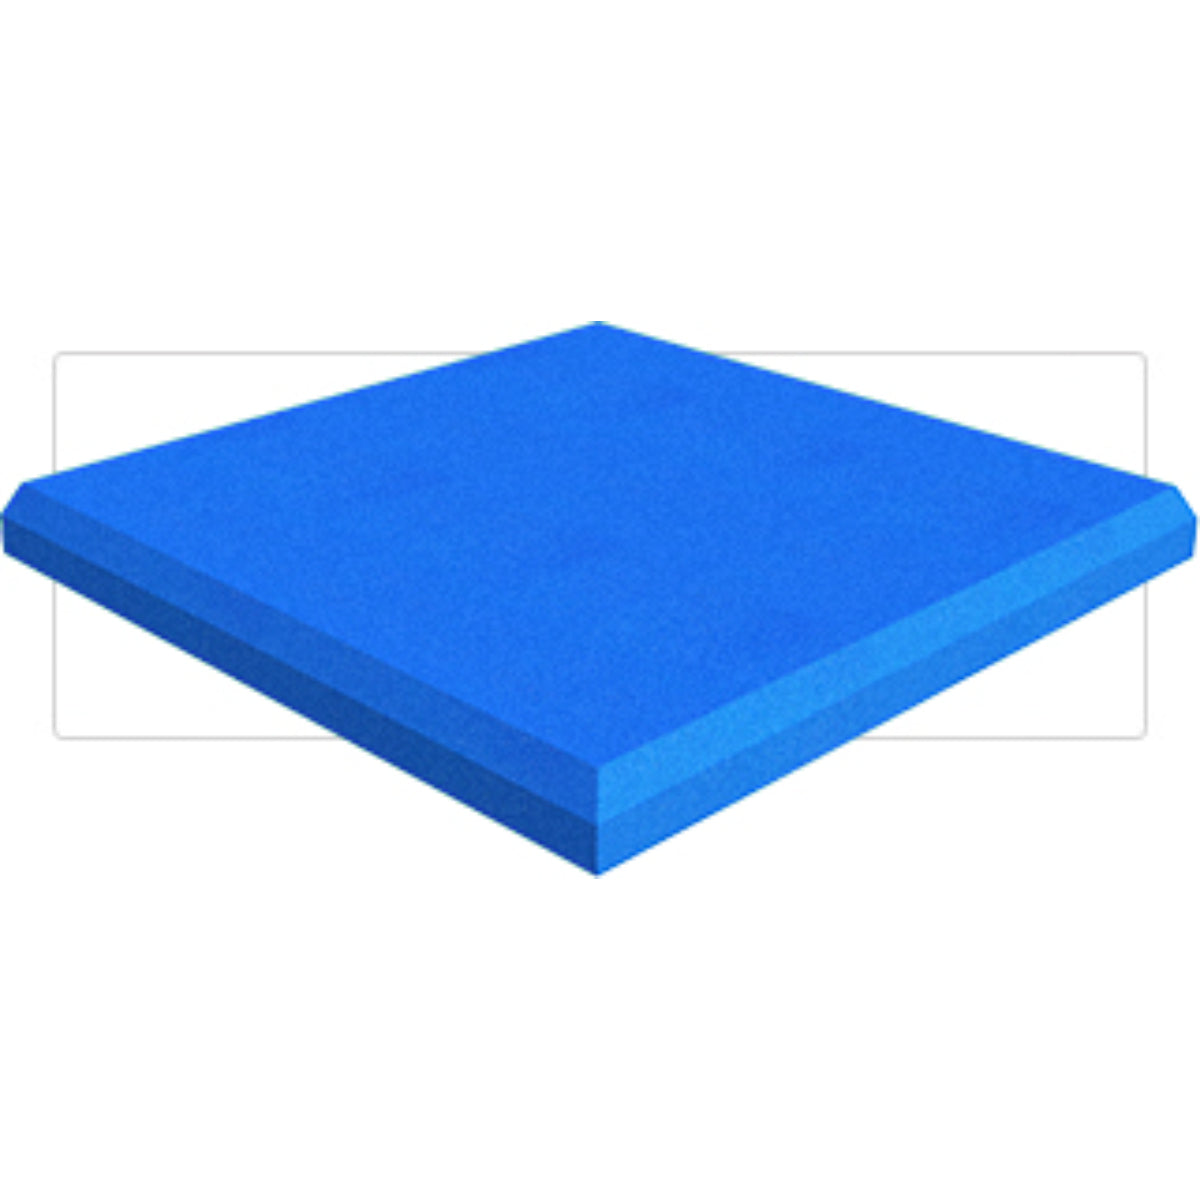 Acoustic Treatment - Abzorba Wall Tile (500x500x50mm)